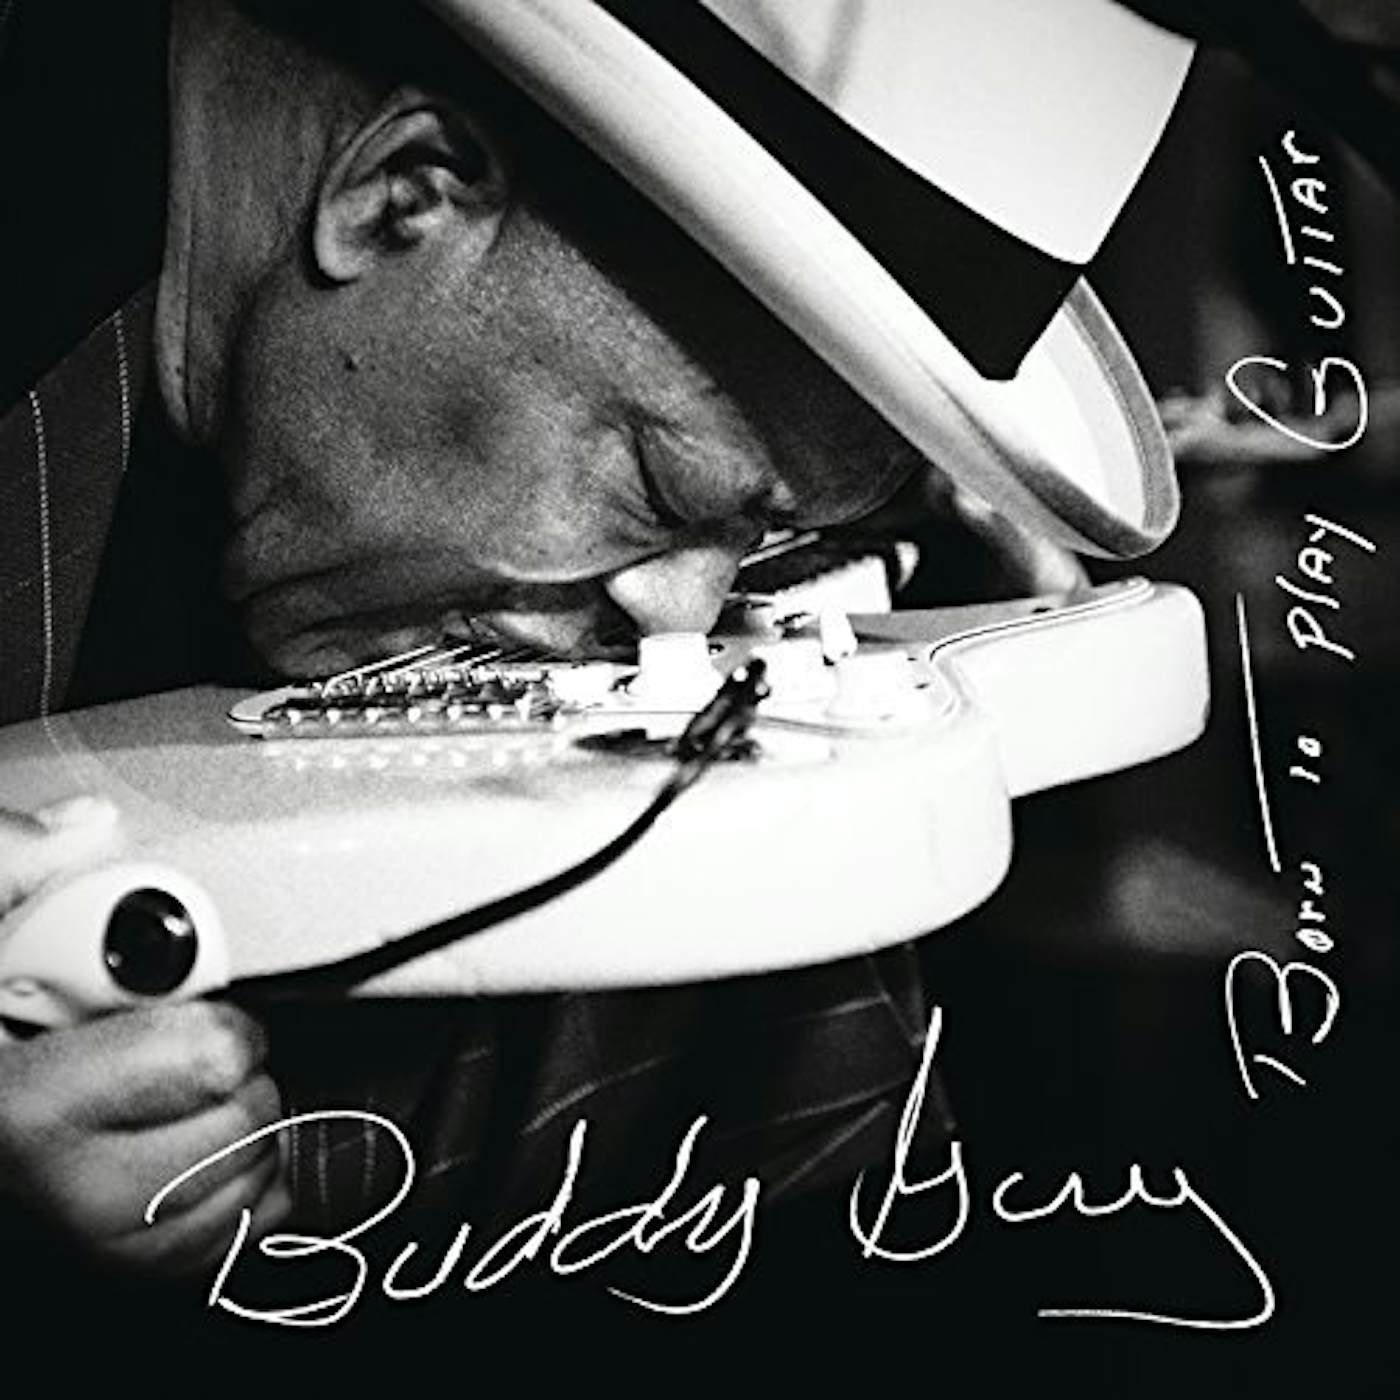 Buddy Guy BORN TO PLAY GUITAR CD